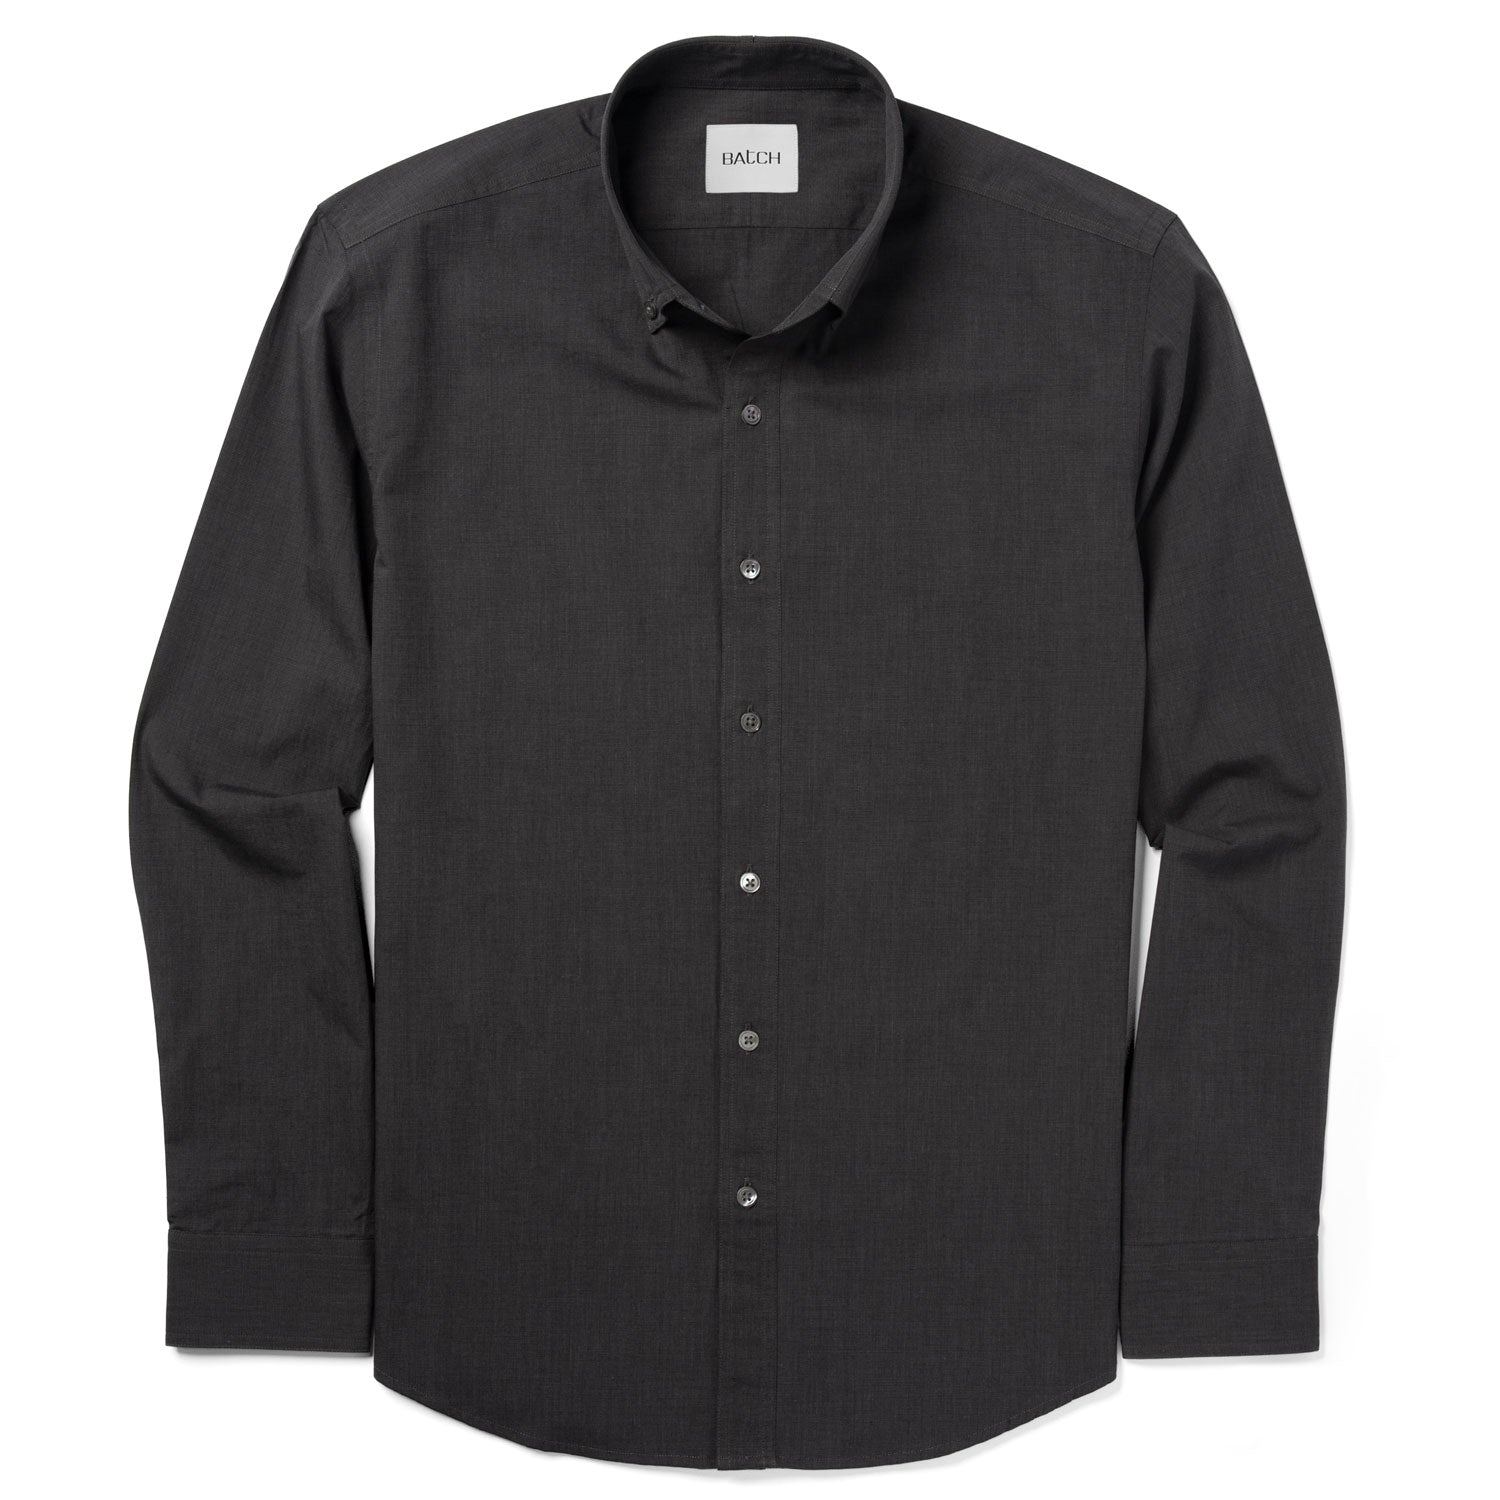 Essential Casual Shirt - Asphalt Gray Cotton End-on-end